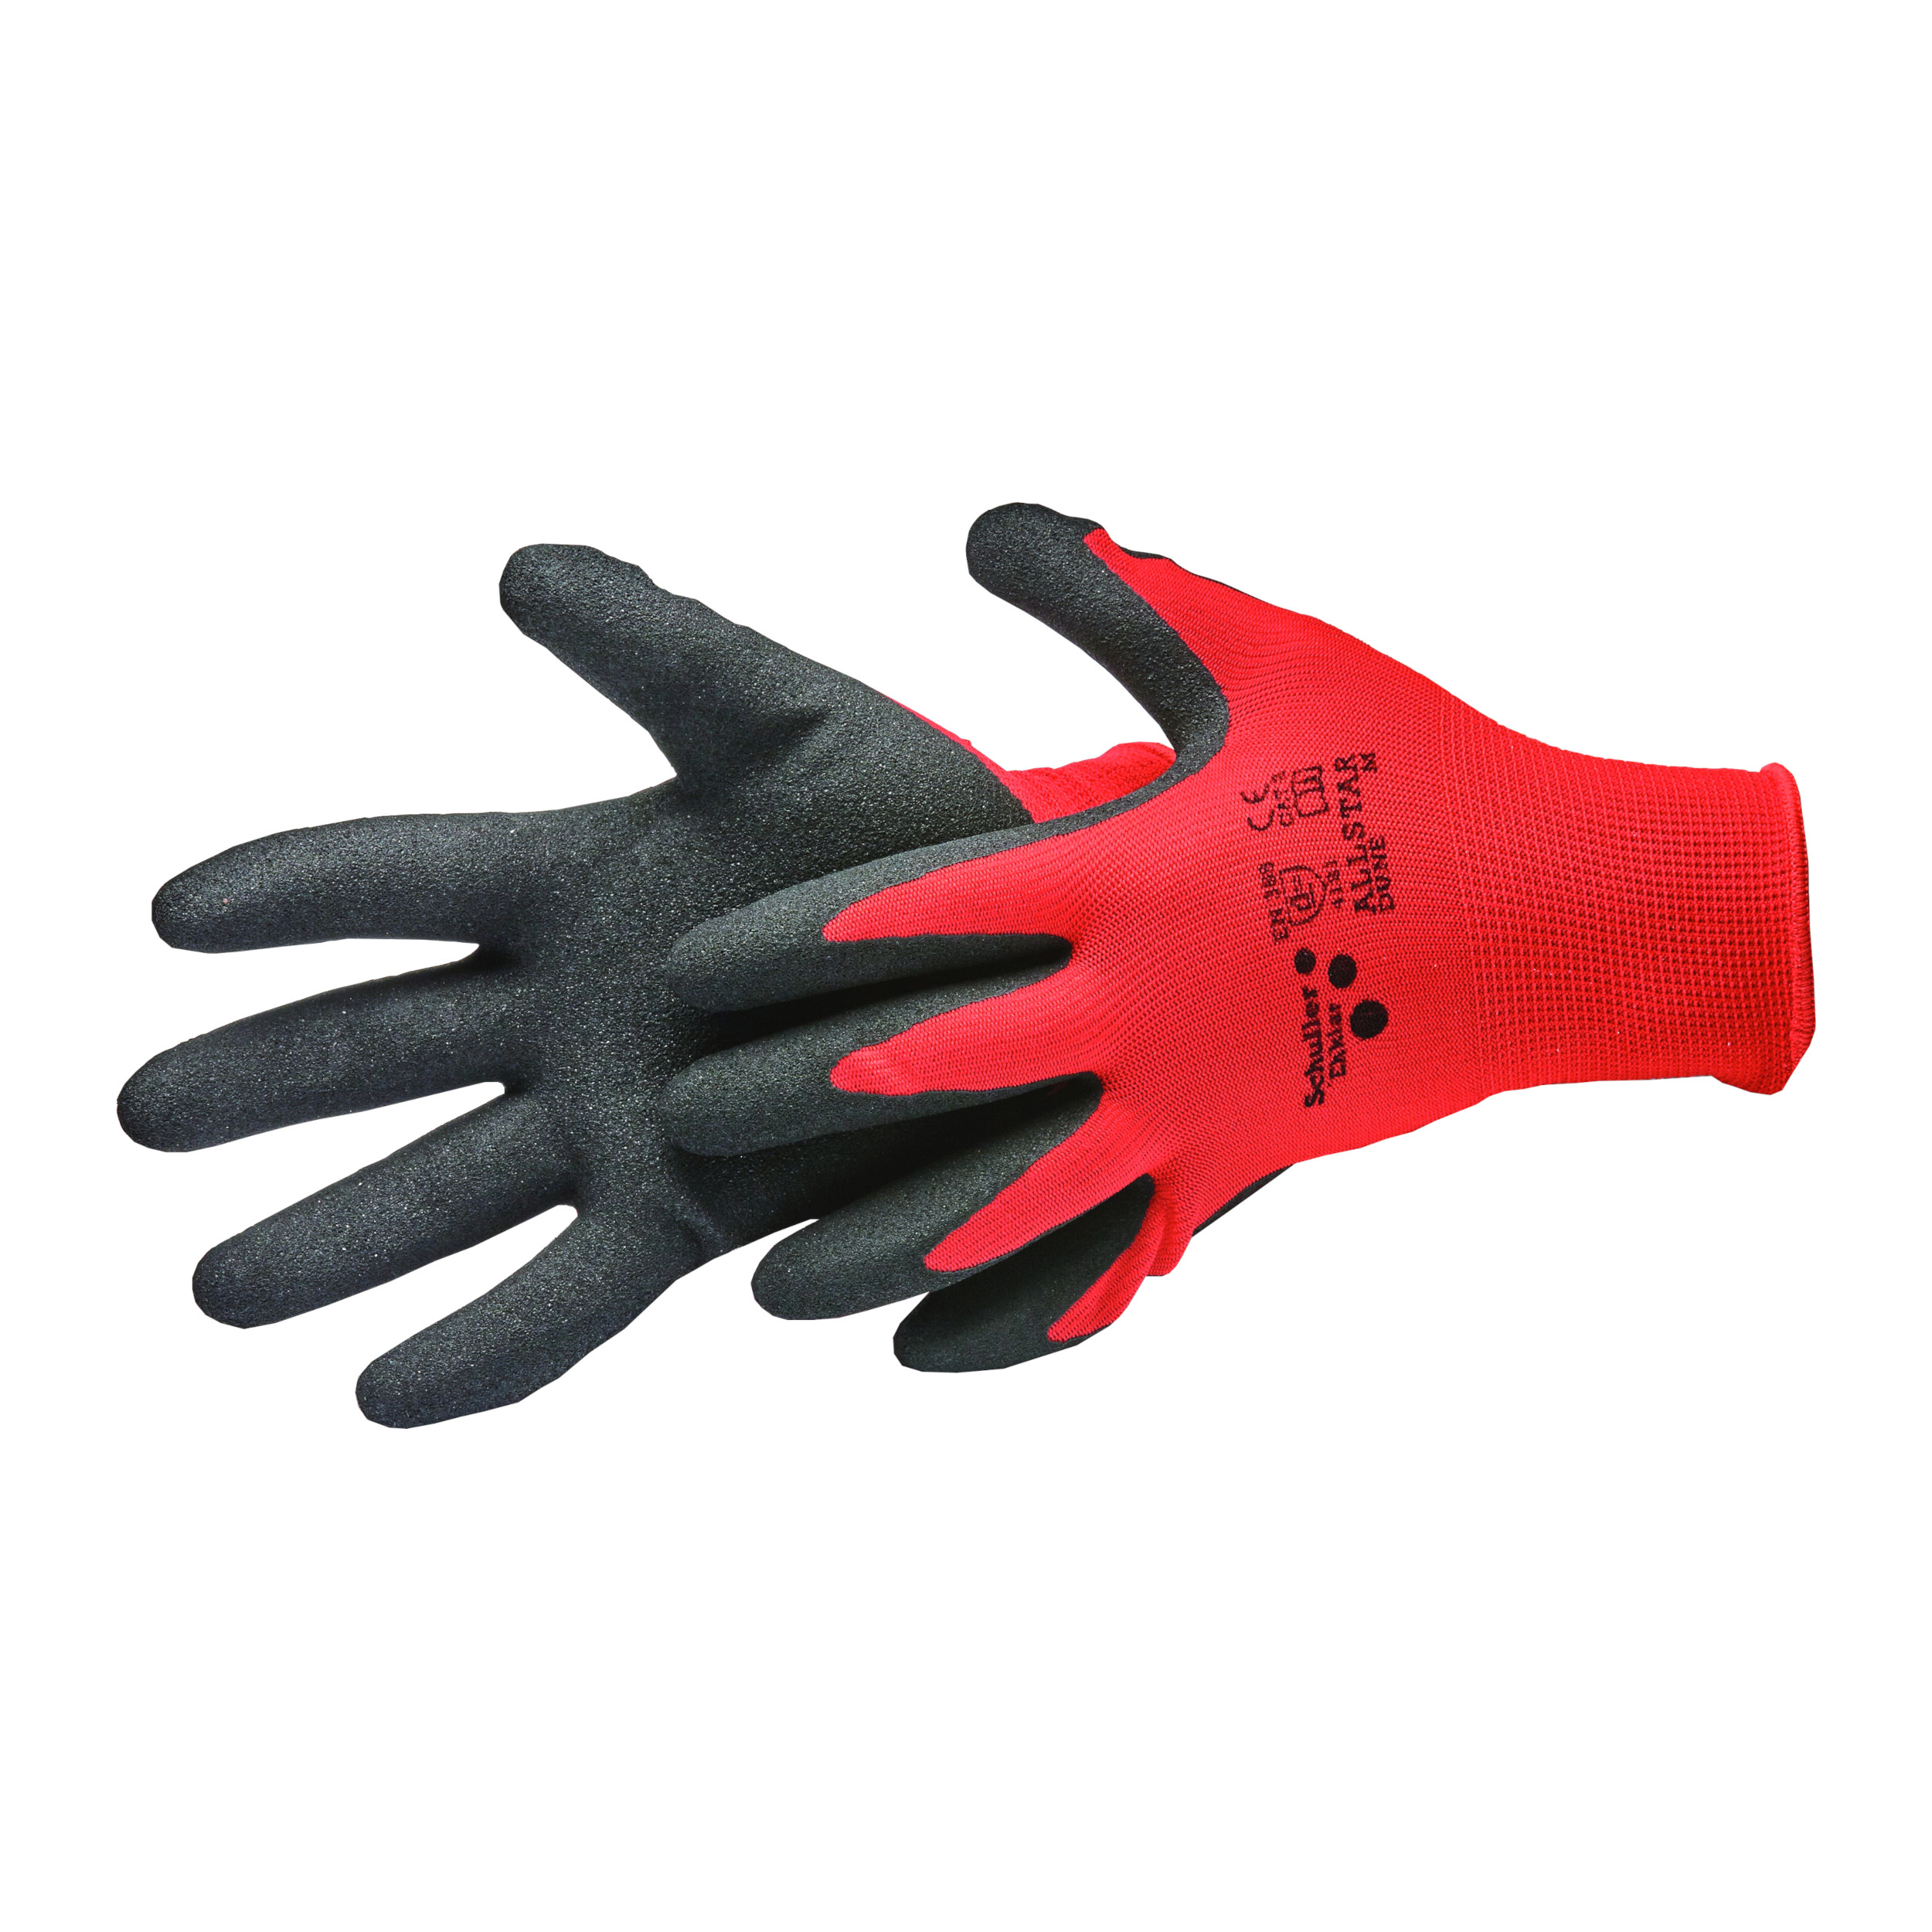 rukavice ALLSTAR, s nitrilovým potahem a úpletem, velikost 9 0.07 Kg TOP Sklad4 600119 227